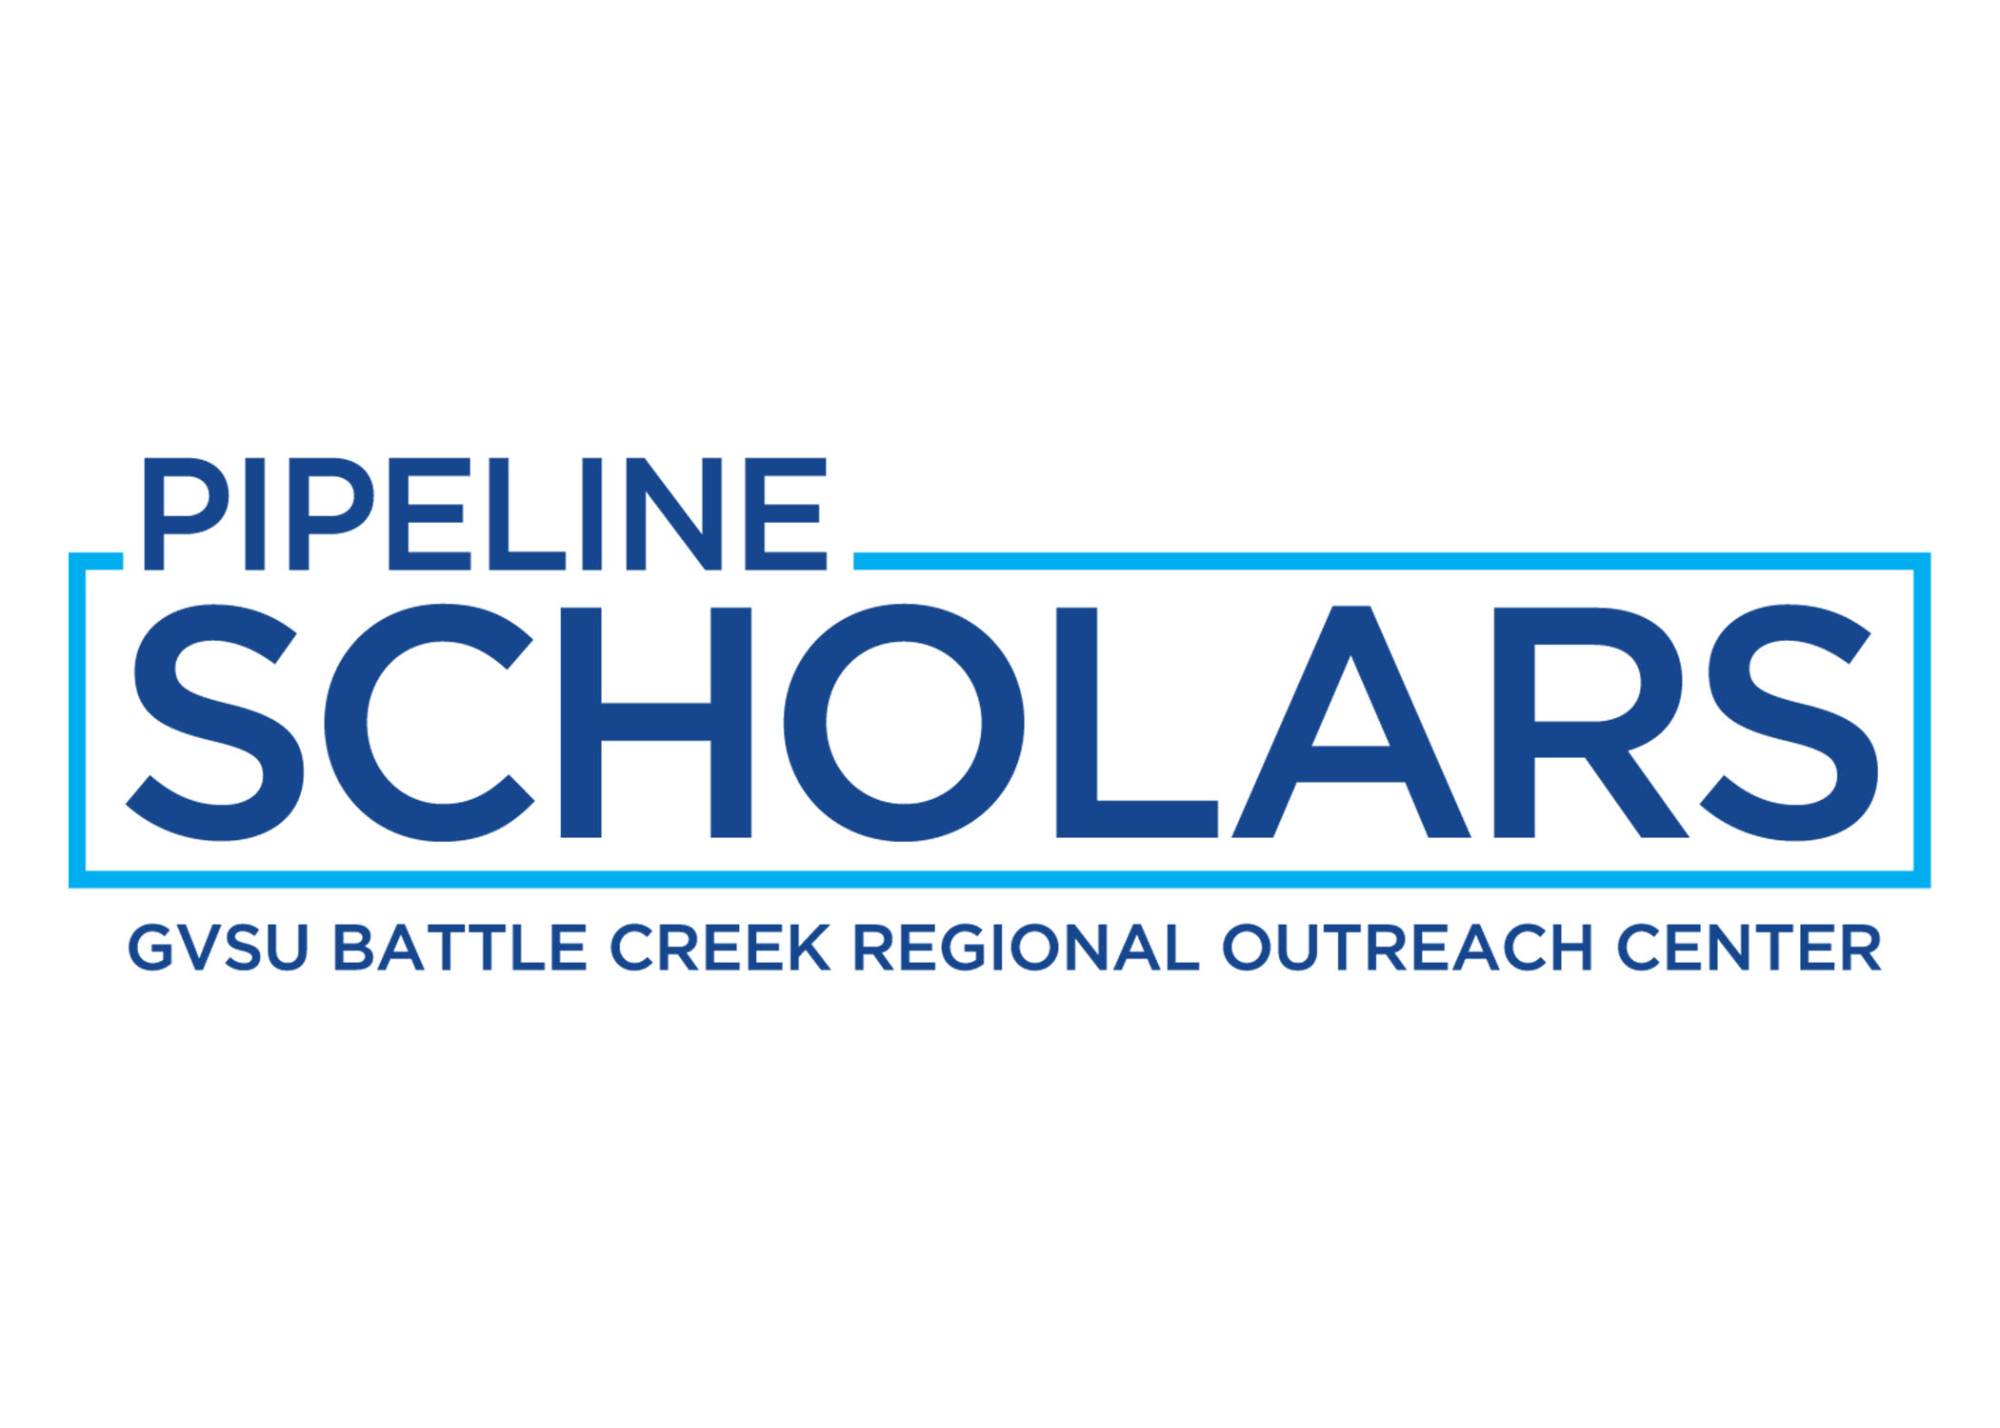 Pipeline Scholars logo